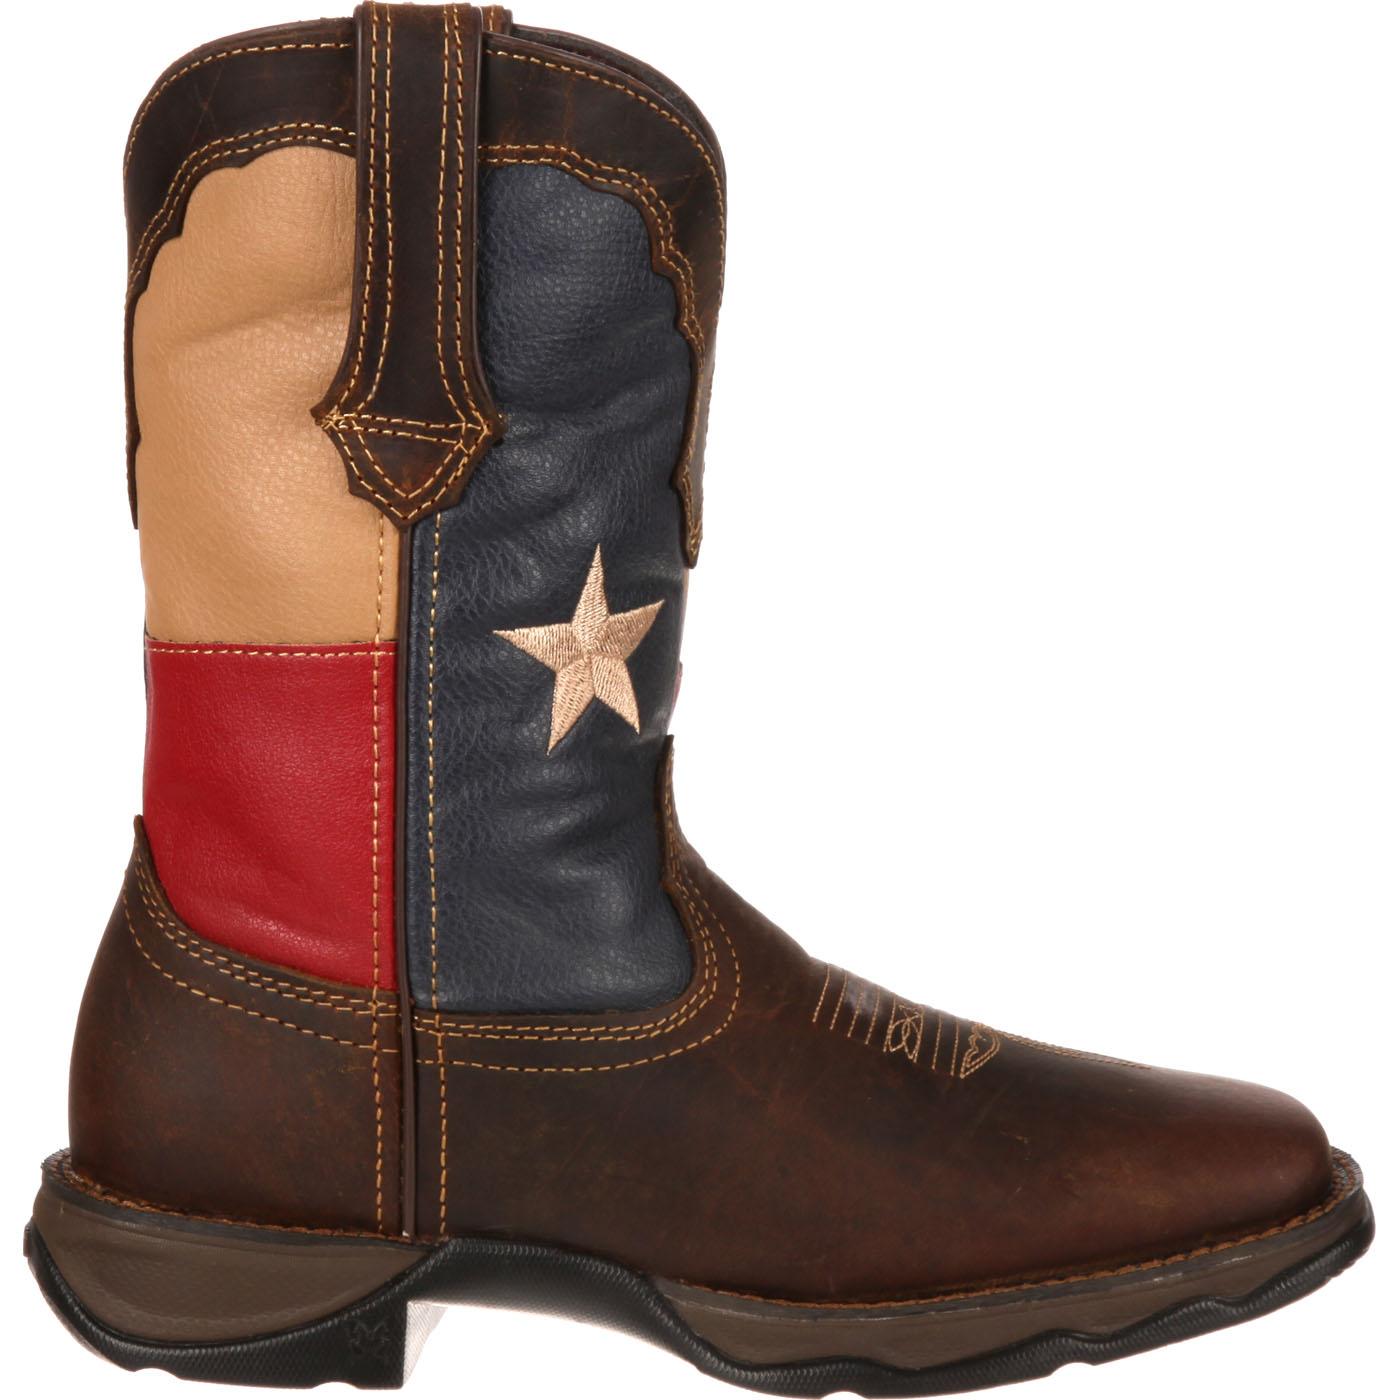 Lady Rebel by Durango: Women's Texas Flag Western Boots